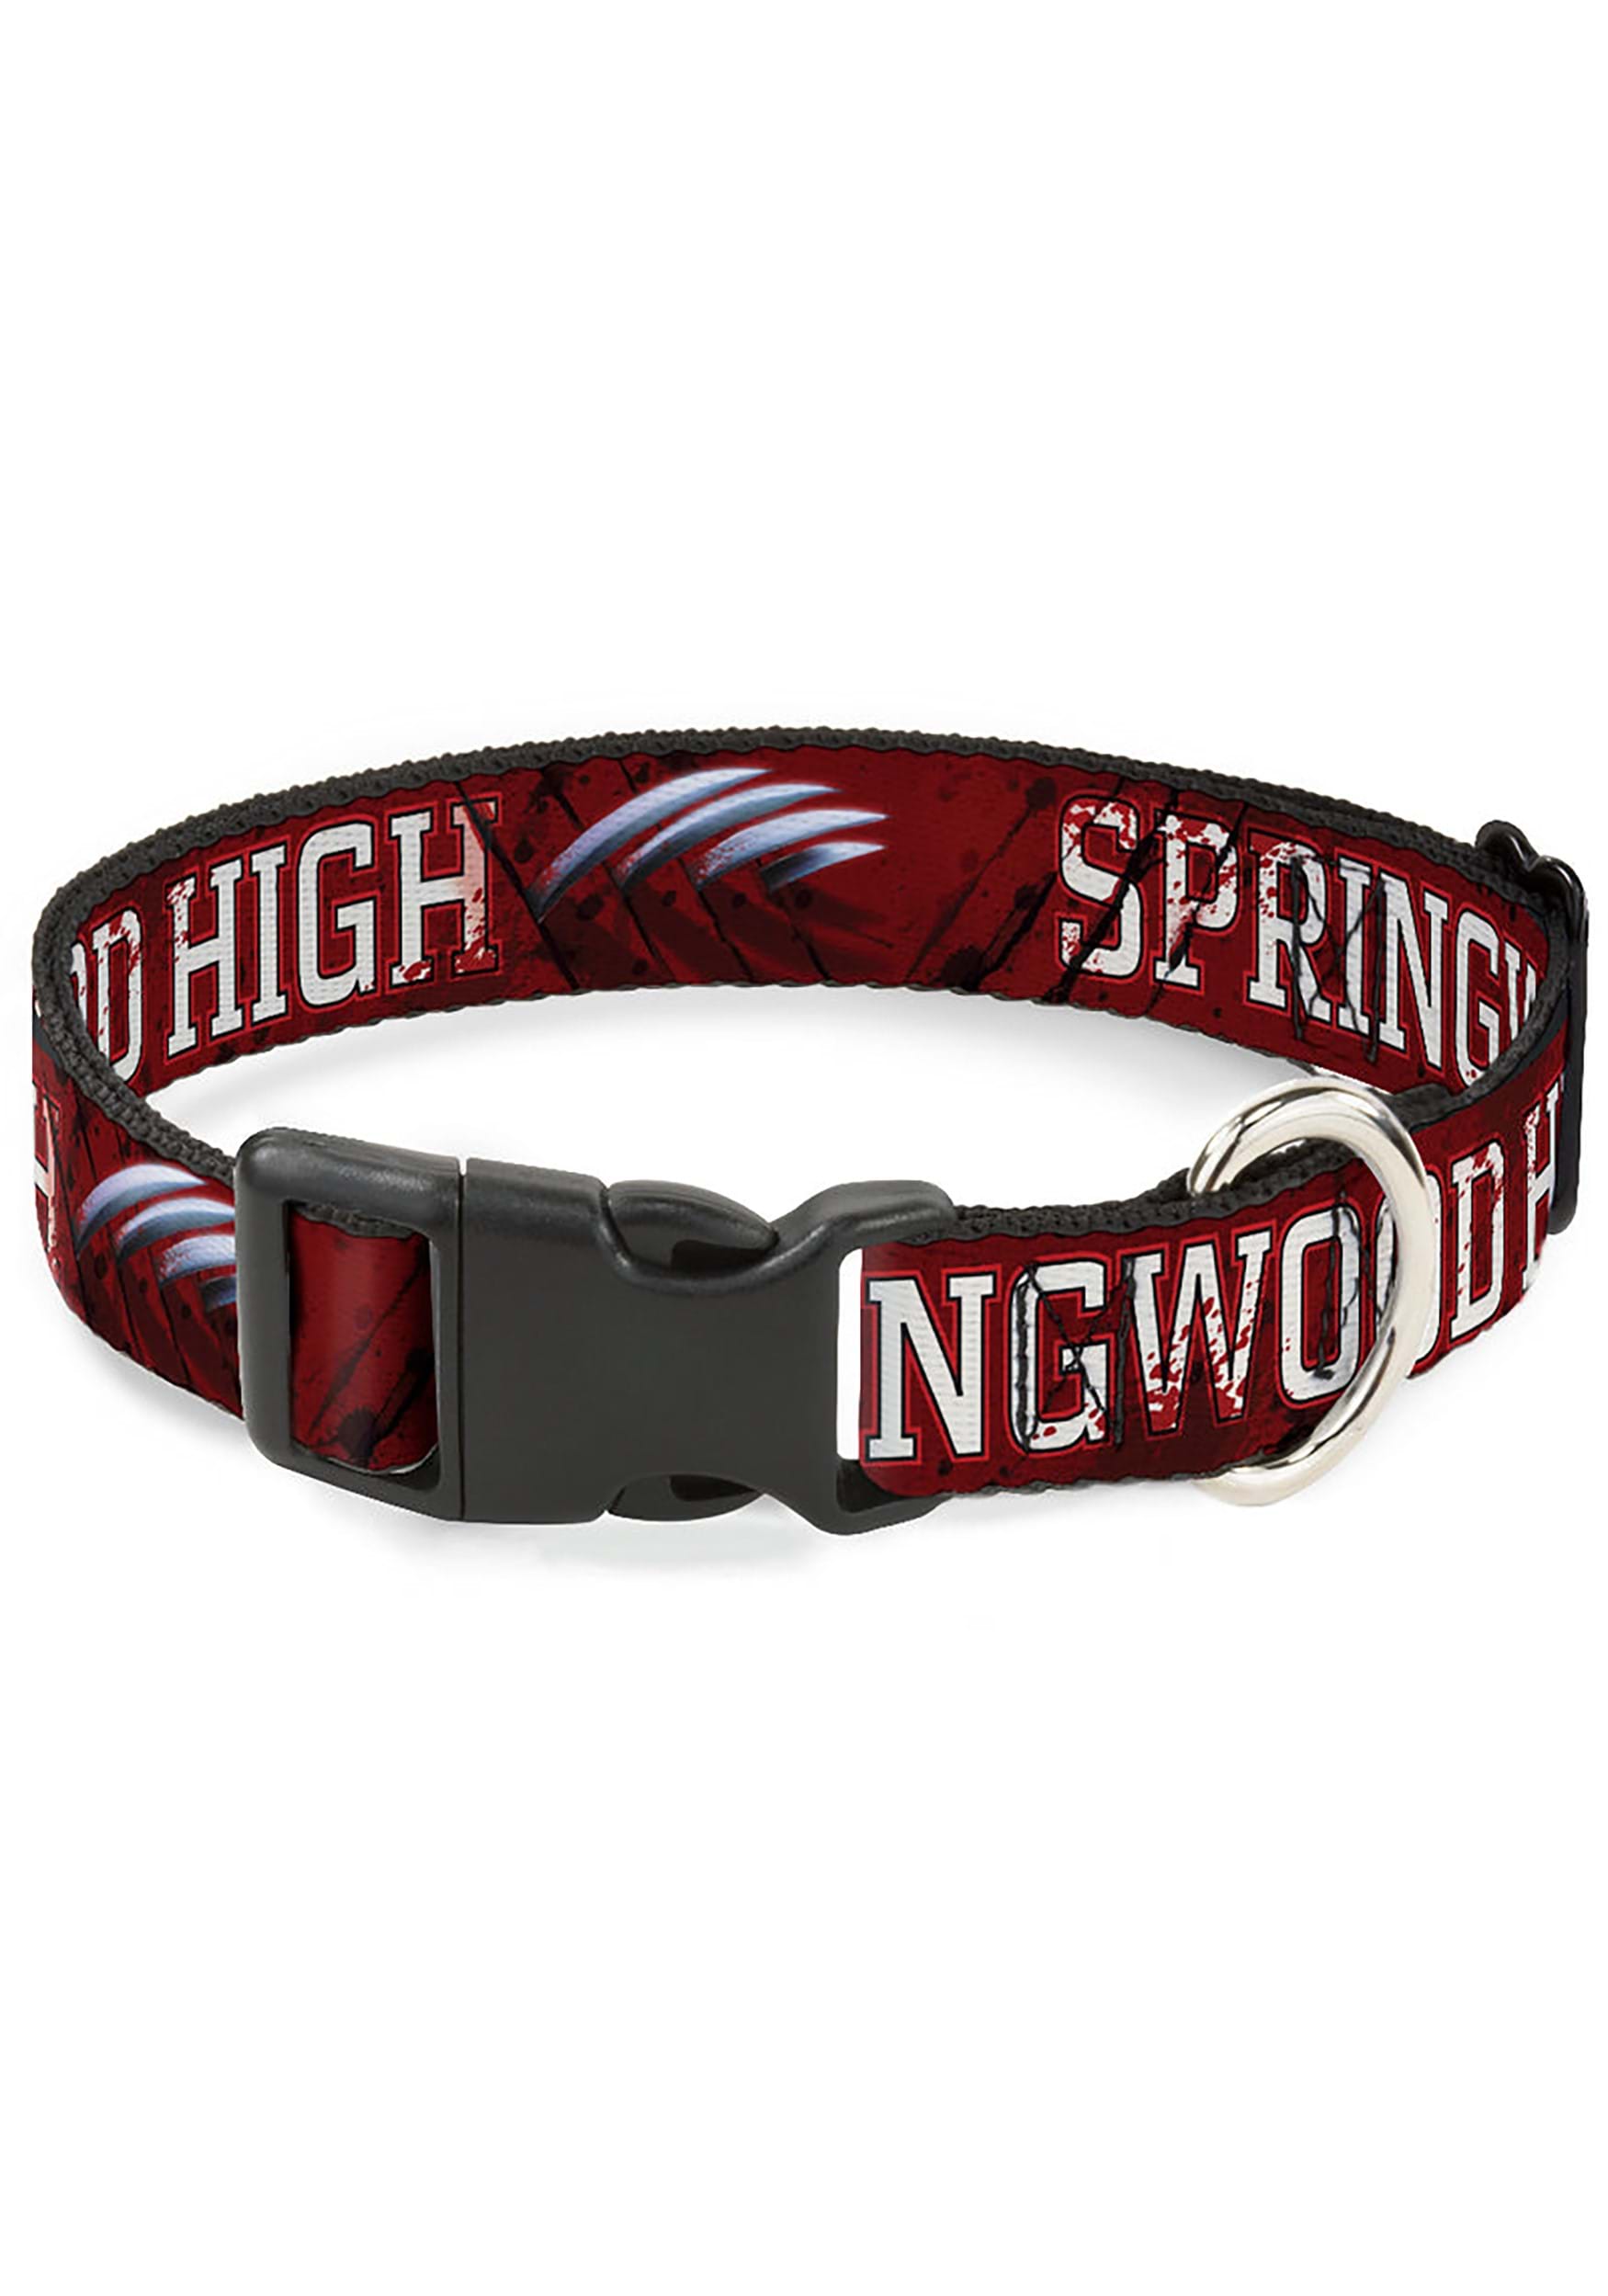 Springwood High Freddy Krueger Pet Collar Multicolor